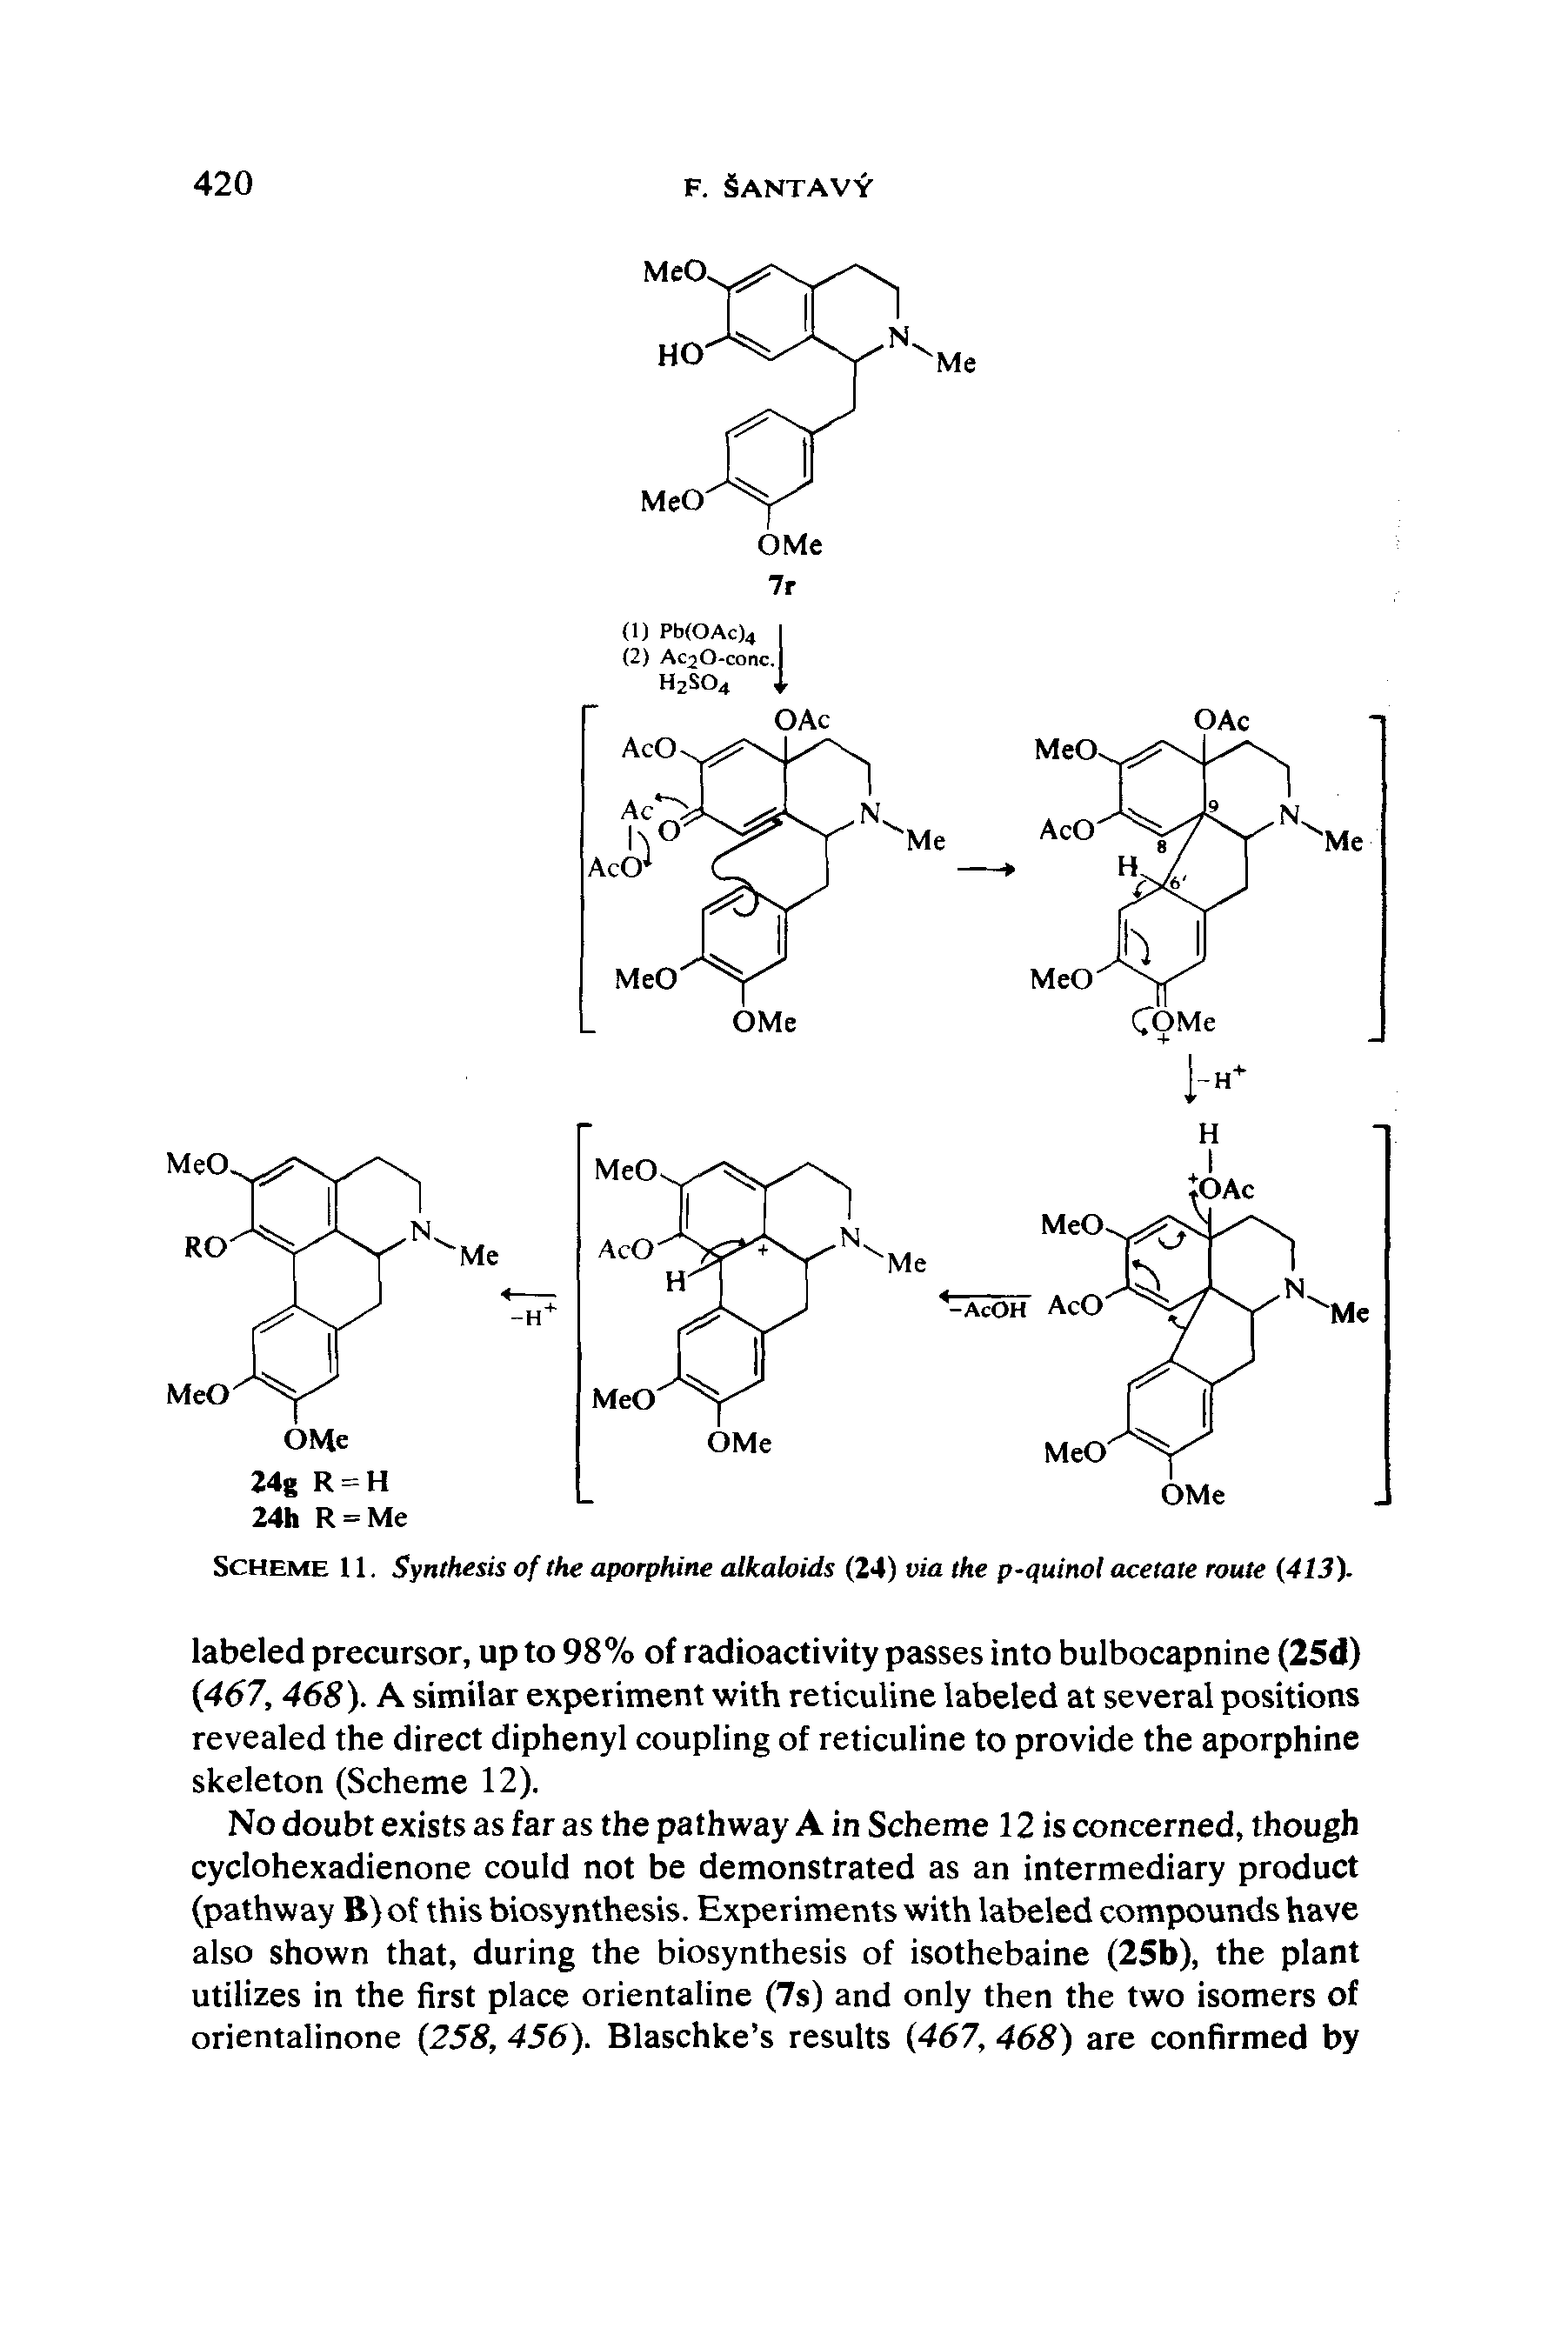 Scheme 11. Synthesis of the aporphine alkaloids (24) via the p-quinol acetate route (413).